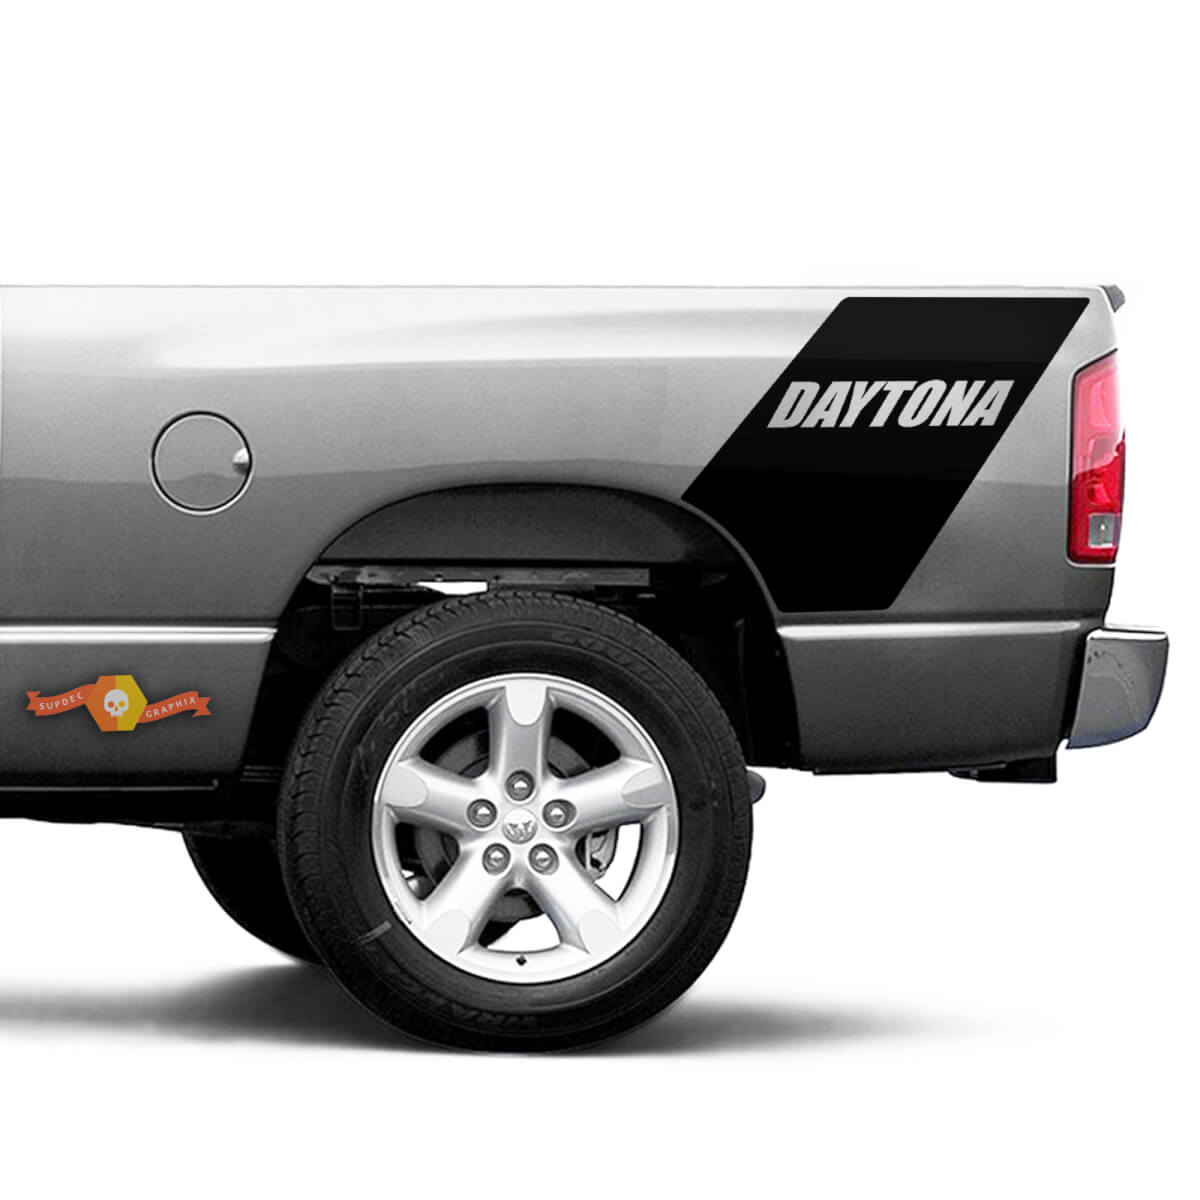 Daytona Dodge Ram 1500 Bed Side Racing Heckstreifen Vinyl Aufkleber Aufkleber